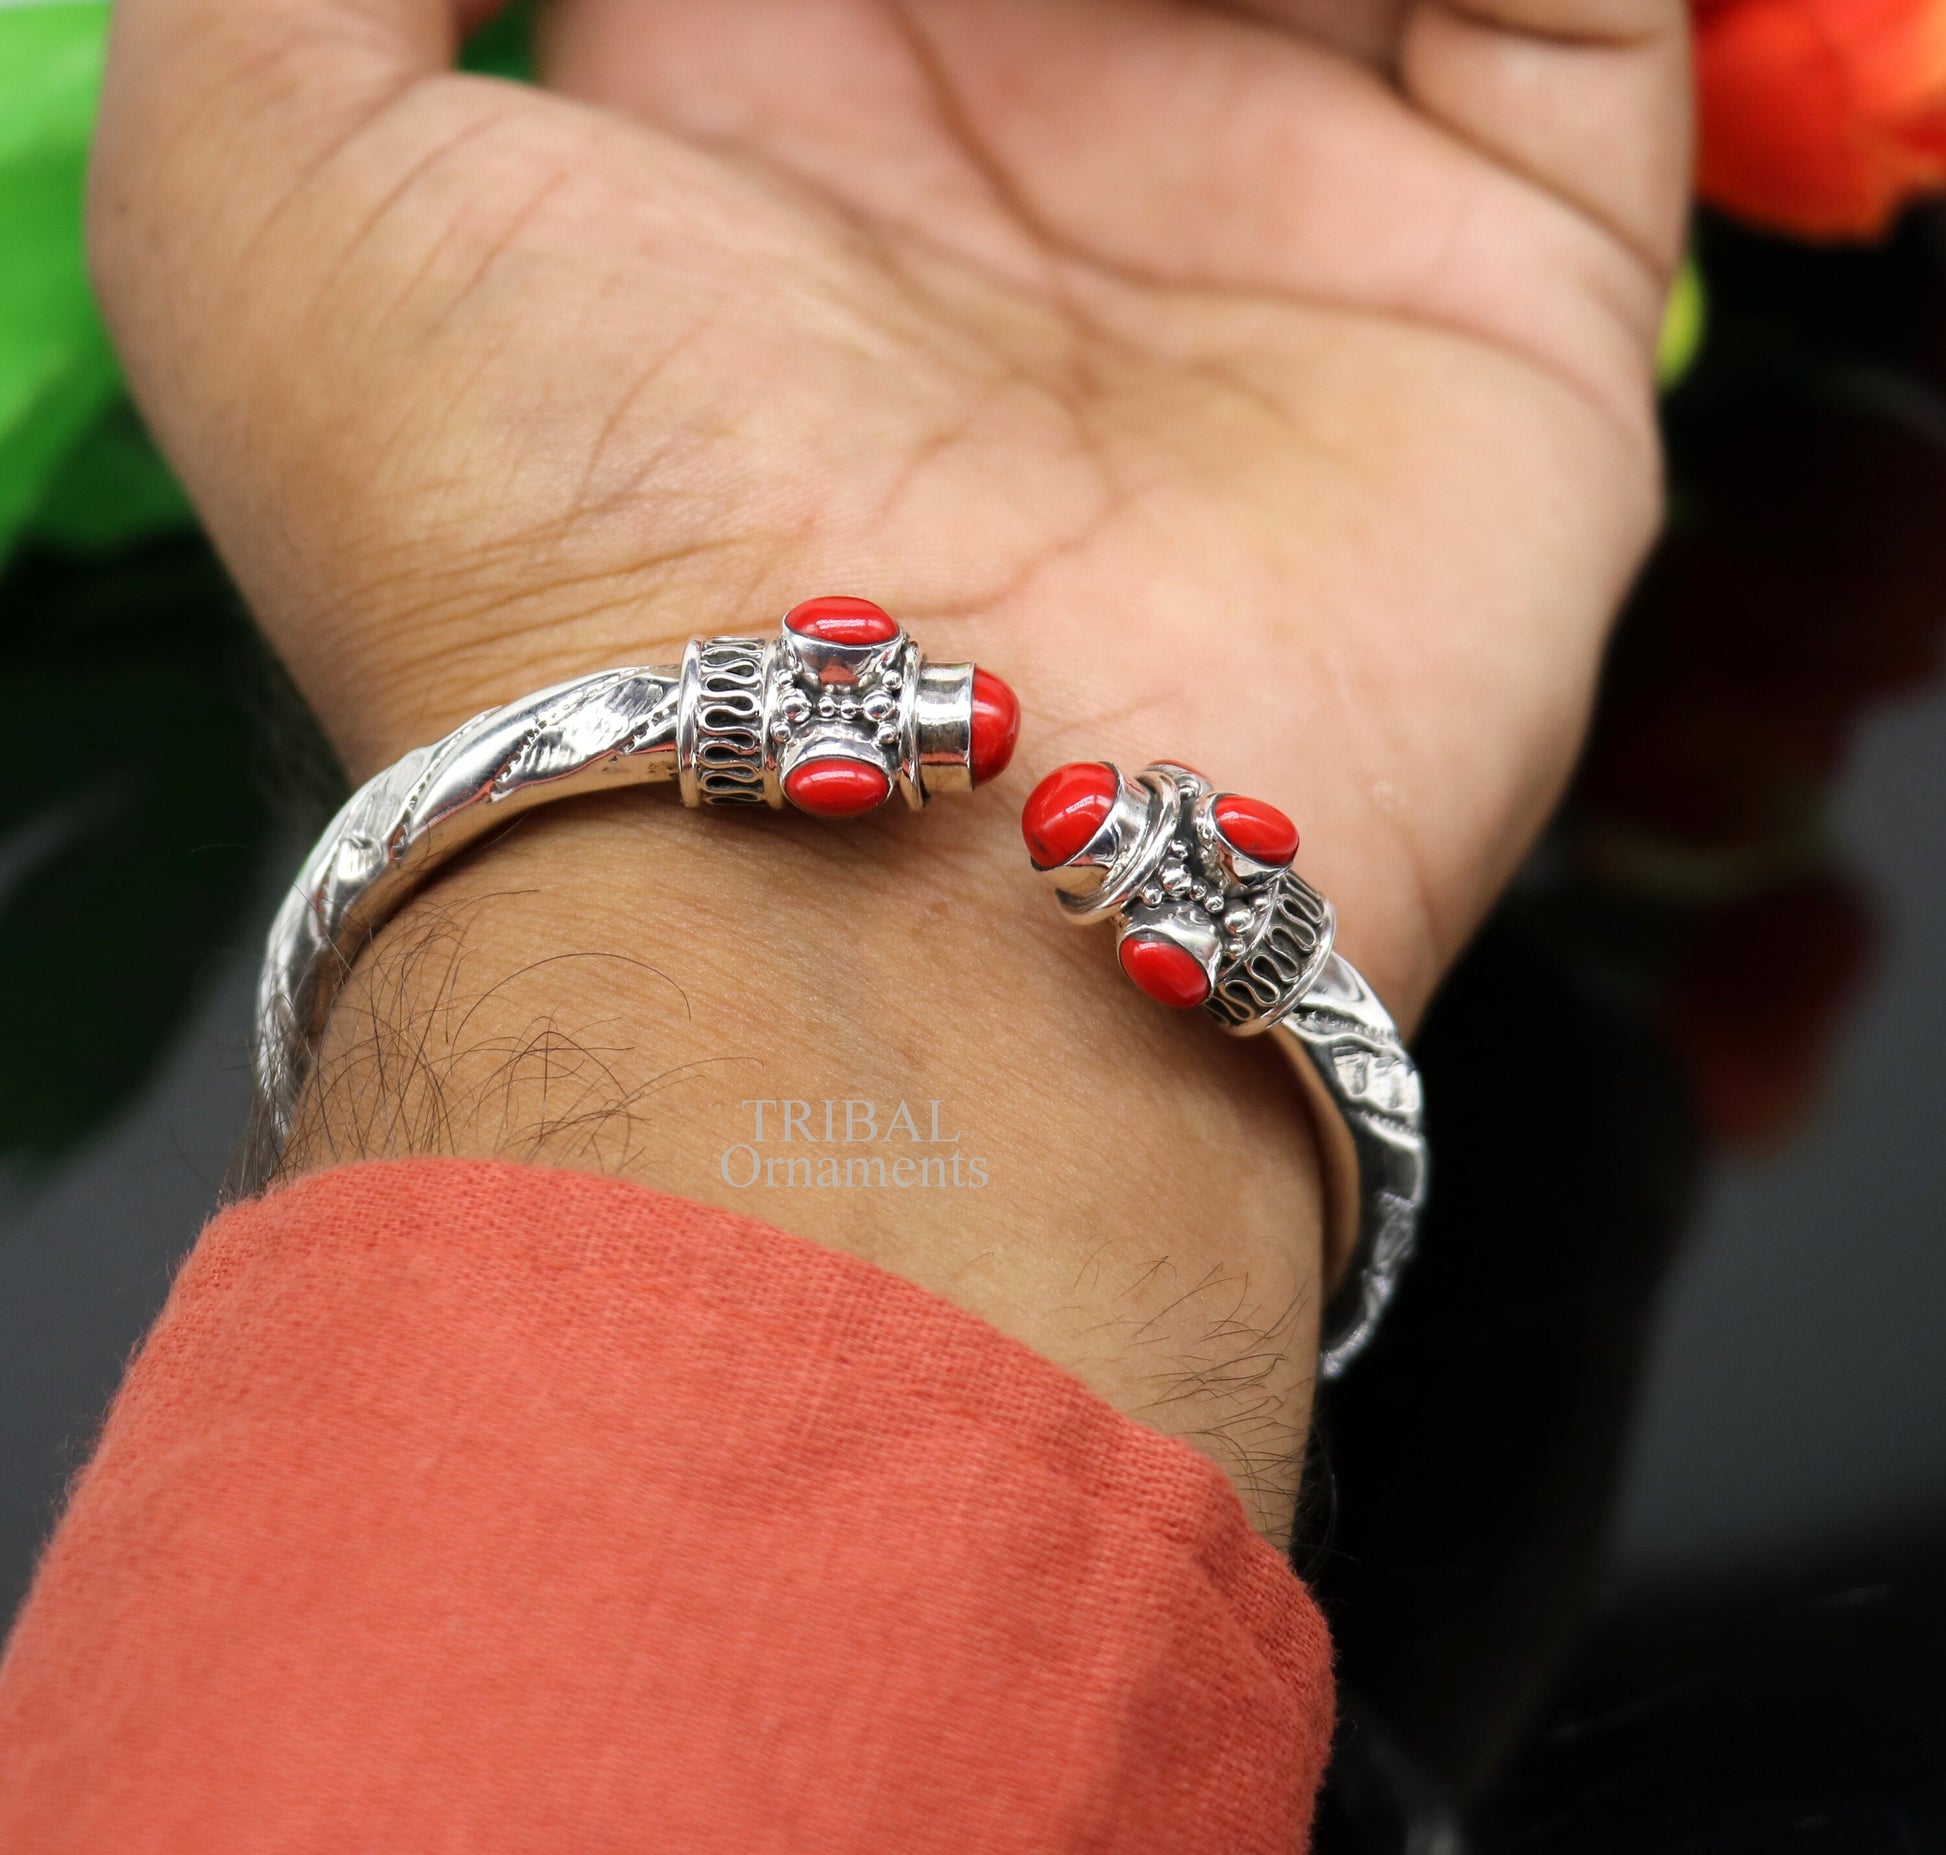 Designer 925 sterling silver handmade gorgeous red stone antique design bangle bracelet kada, fabulous wrist jewelry tribal jewelry nsk103 - TRIBAL ORNAMENTS